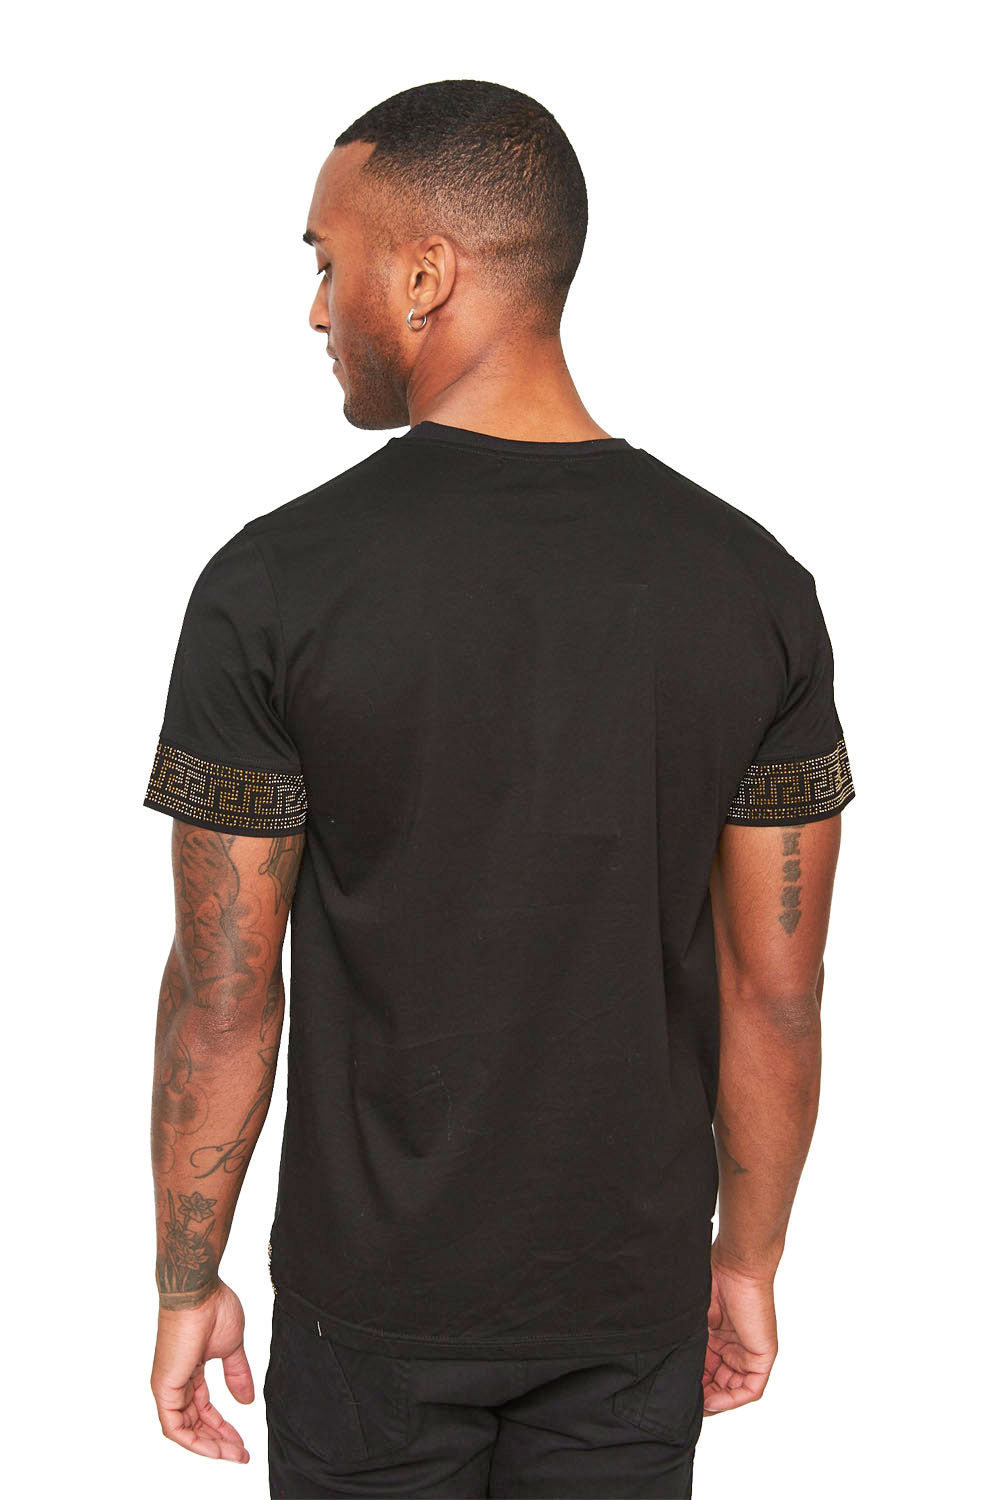 Barabas Men's Rhinestone Greek Key Pattern Black t-shirts ST934 Black Gold